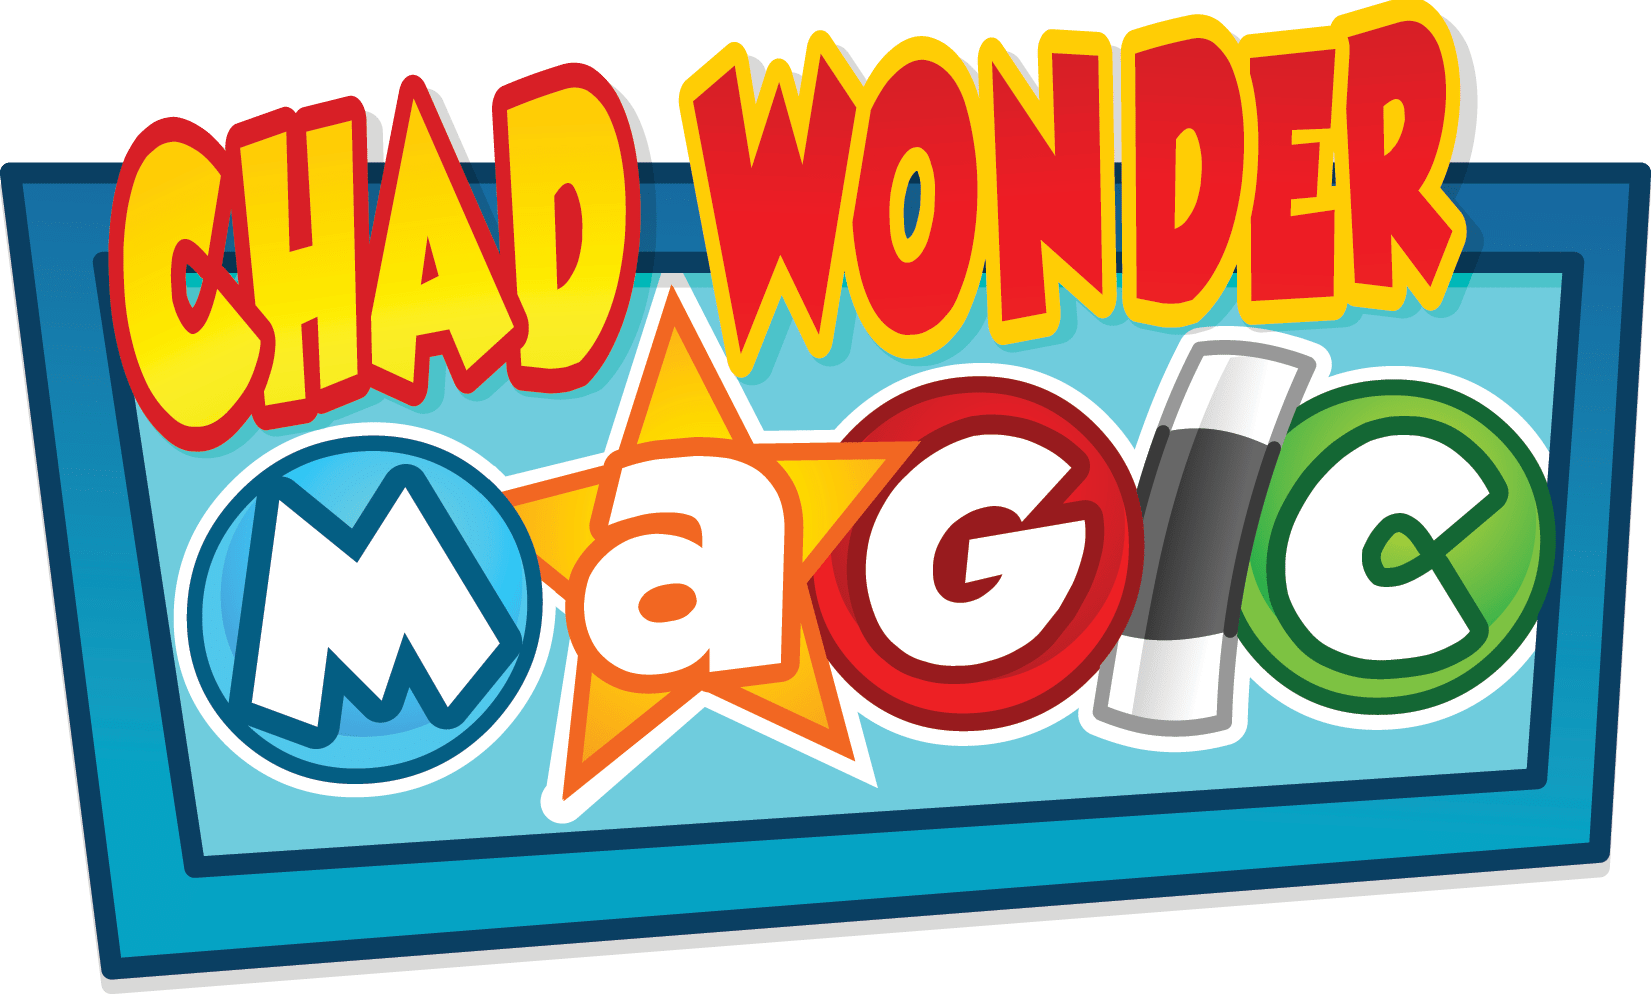 Chad Wonder Family and Kids Magic